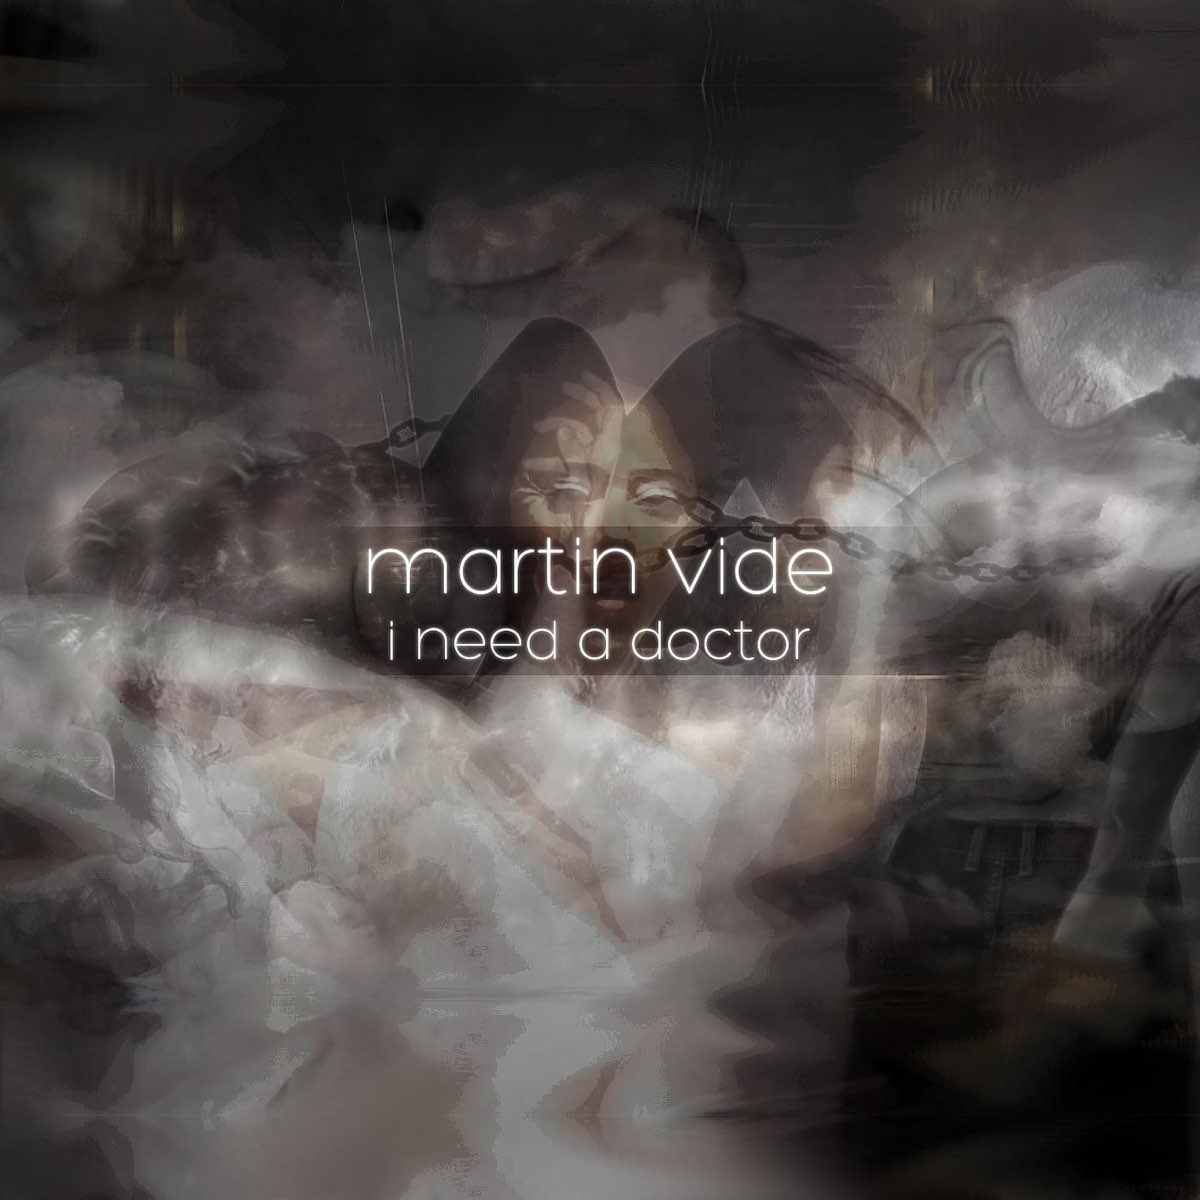 Vide me. "Martin vide" && ( исполнитель | группа | музыка | Music | Band | artist ) && (фото | photo). I need a Doctor. Besomage & Bran - i need a Doctor. Ромео и пик i need a Doctor.